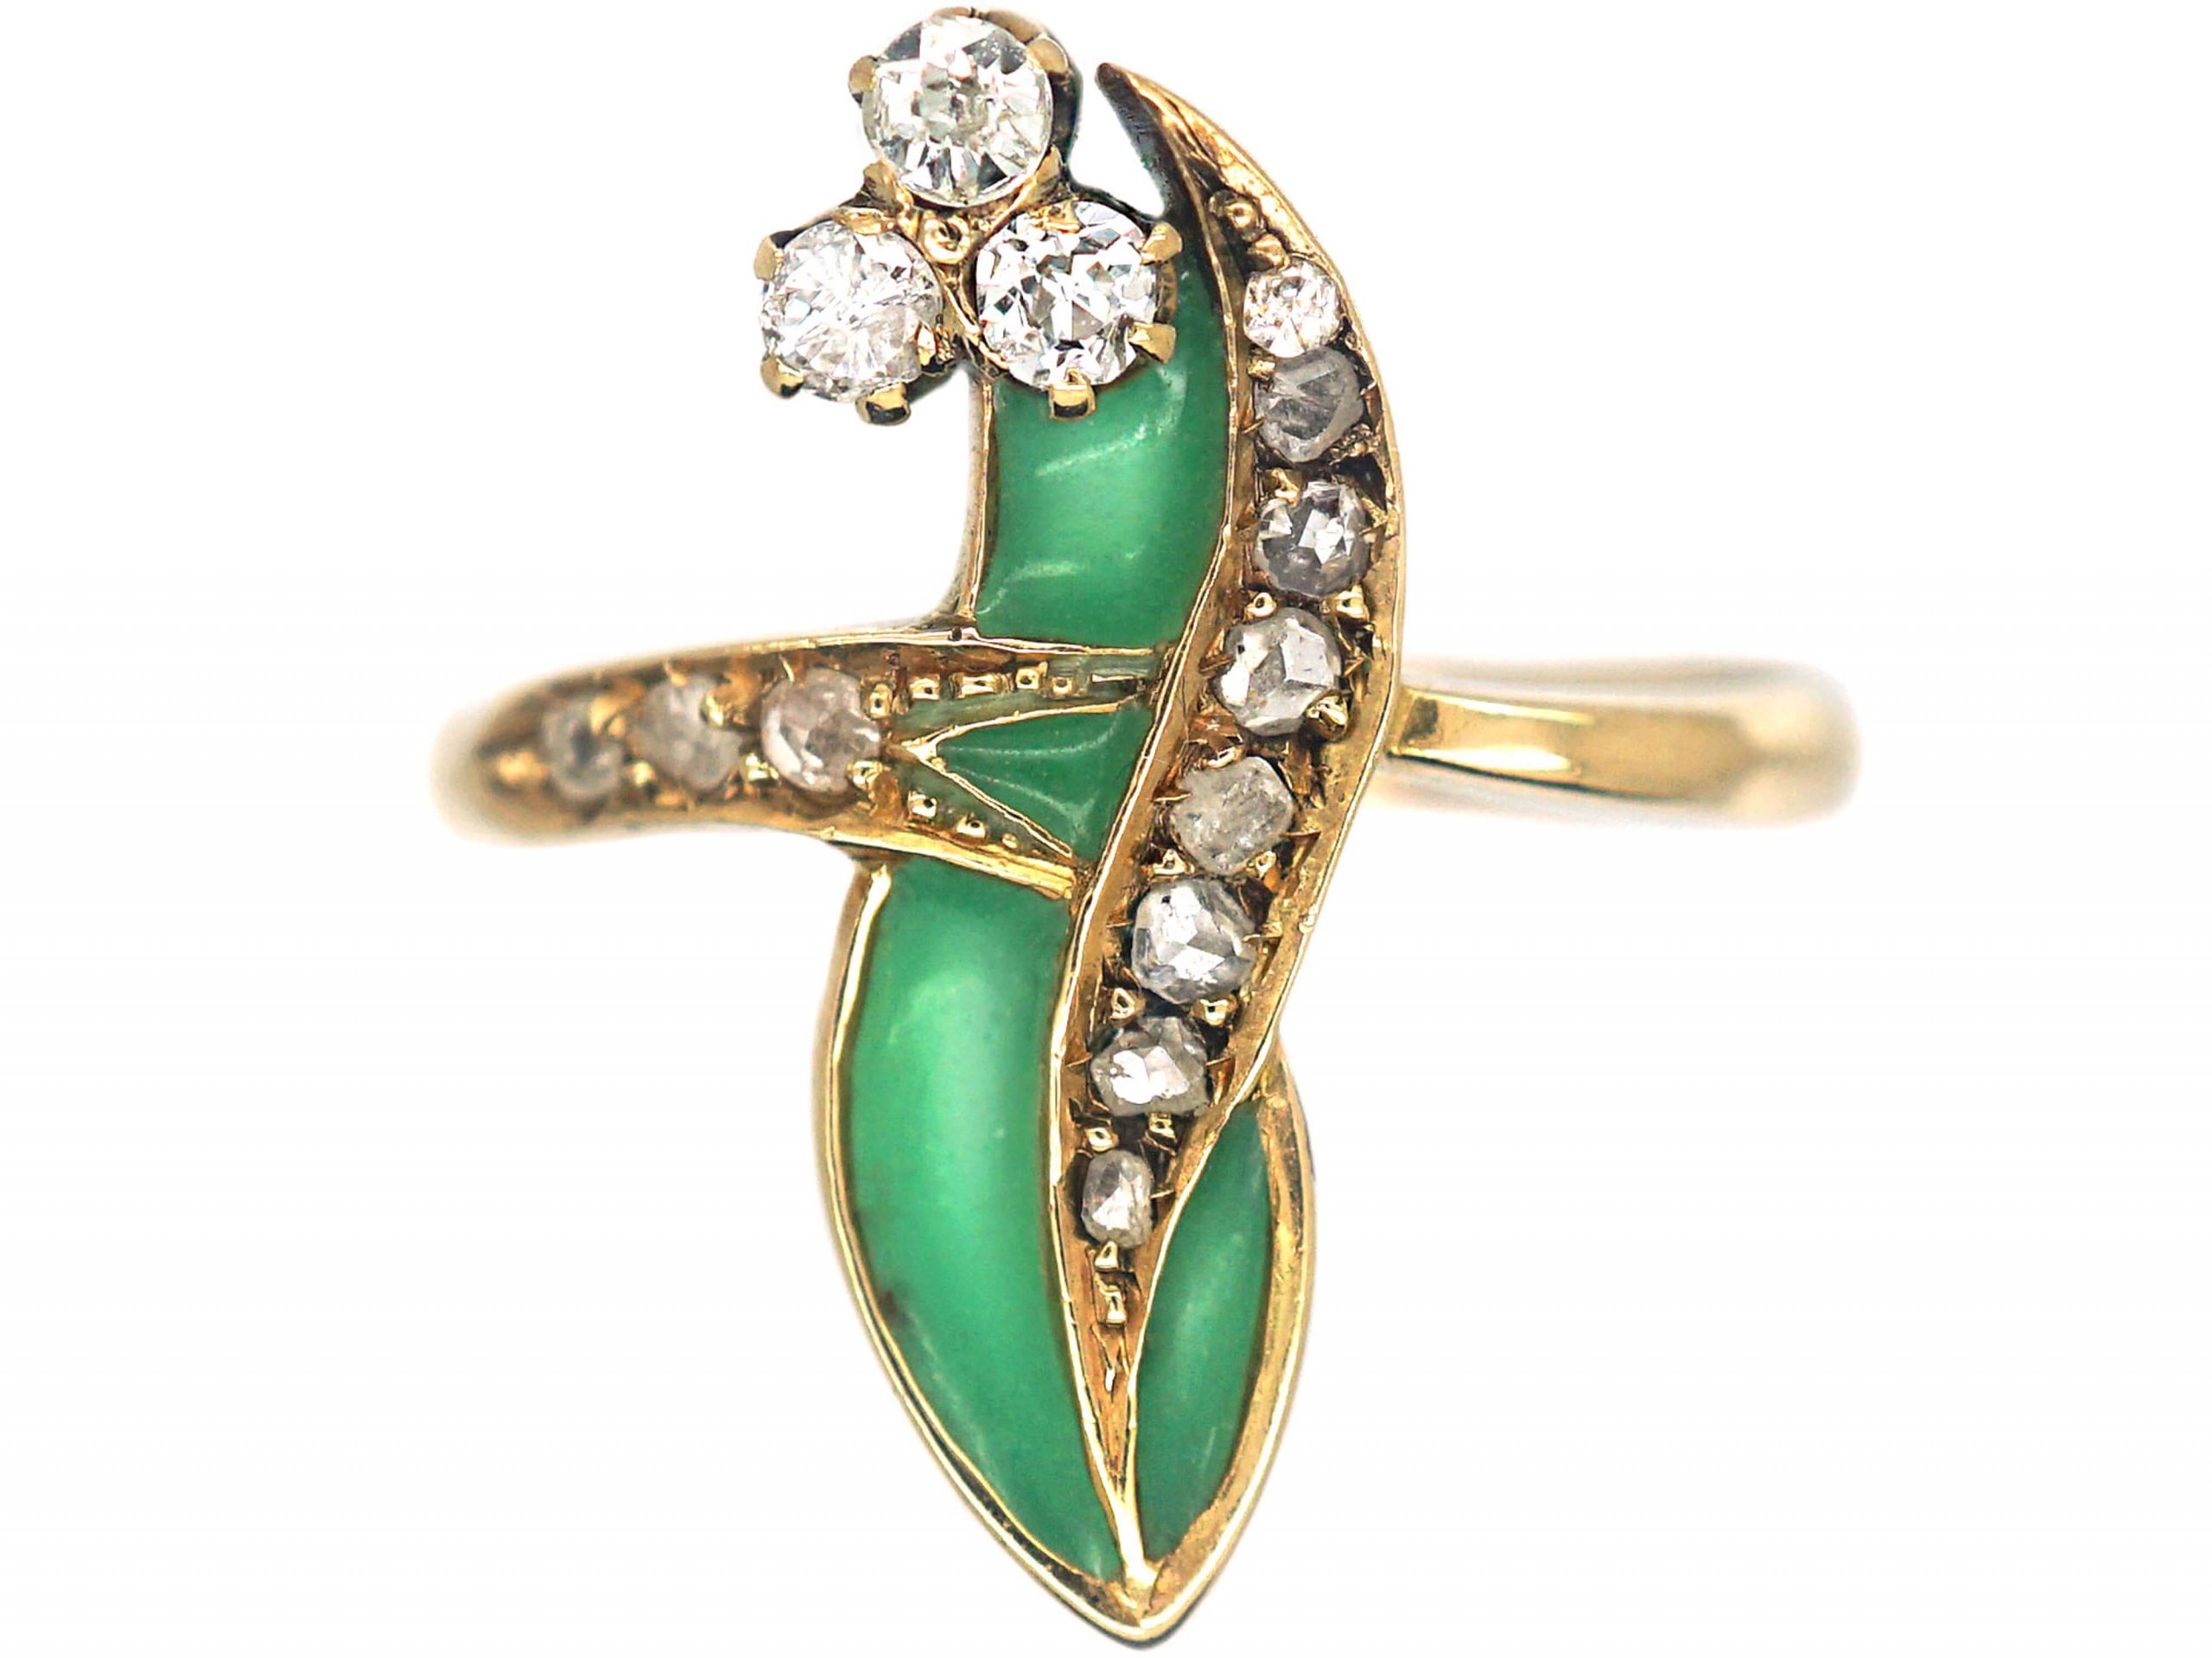 Art Nouveau 18ct Gold Lily of the Valley Ring with Plique a Jour Enamel & Diamonds